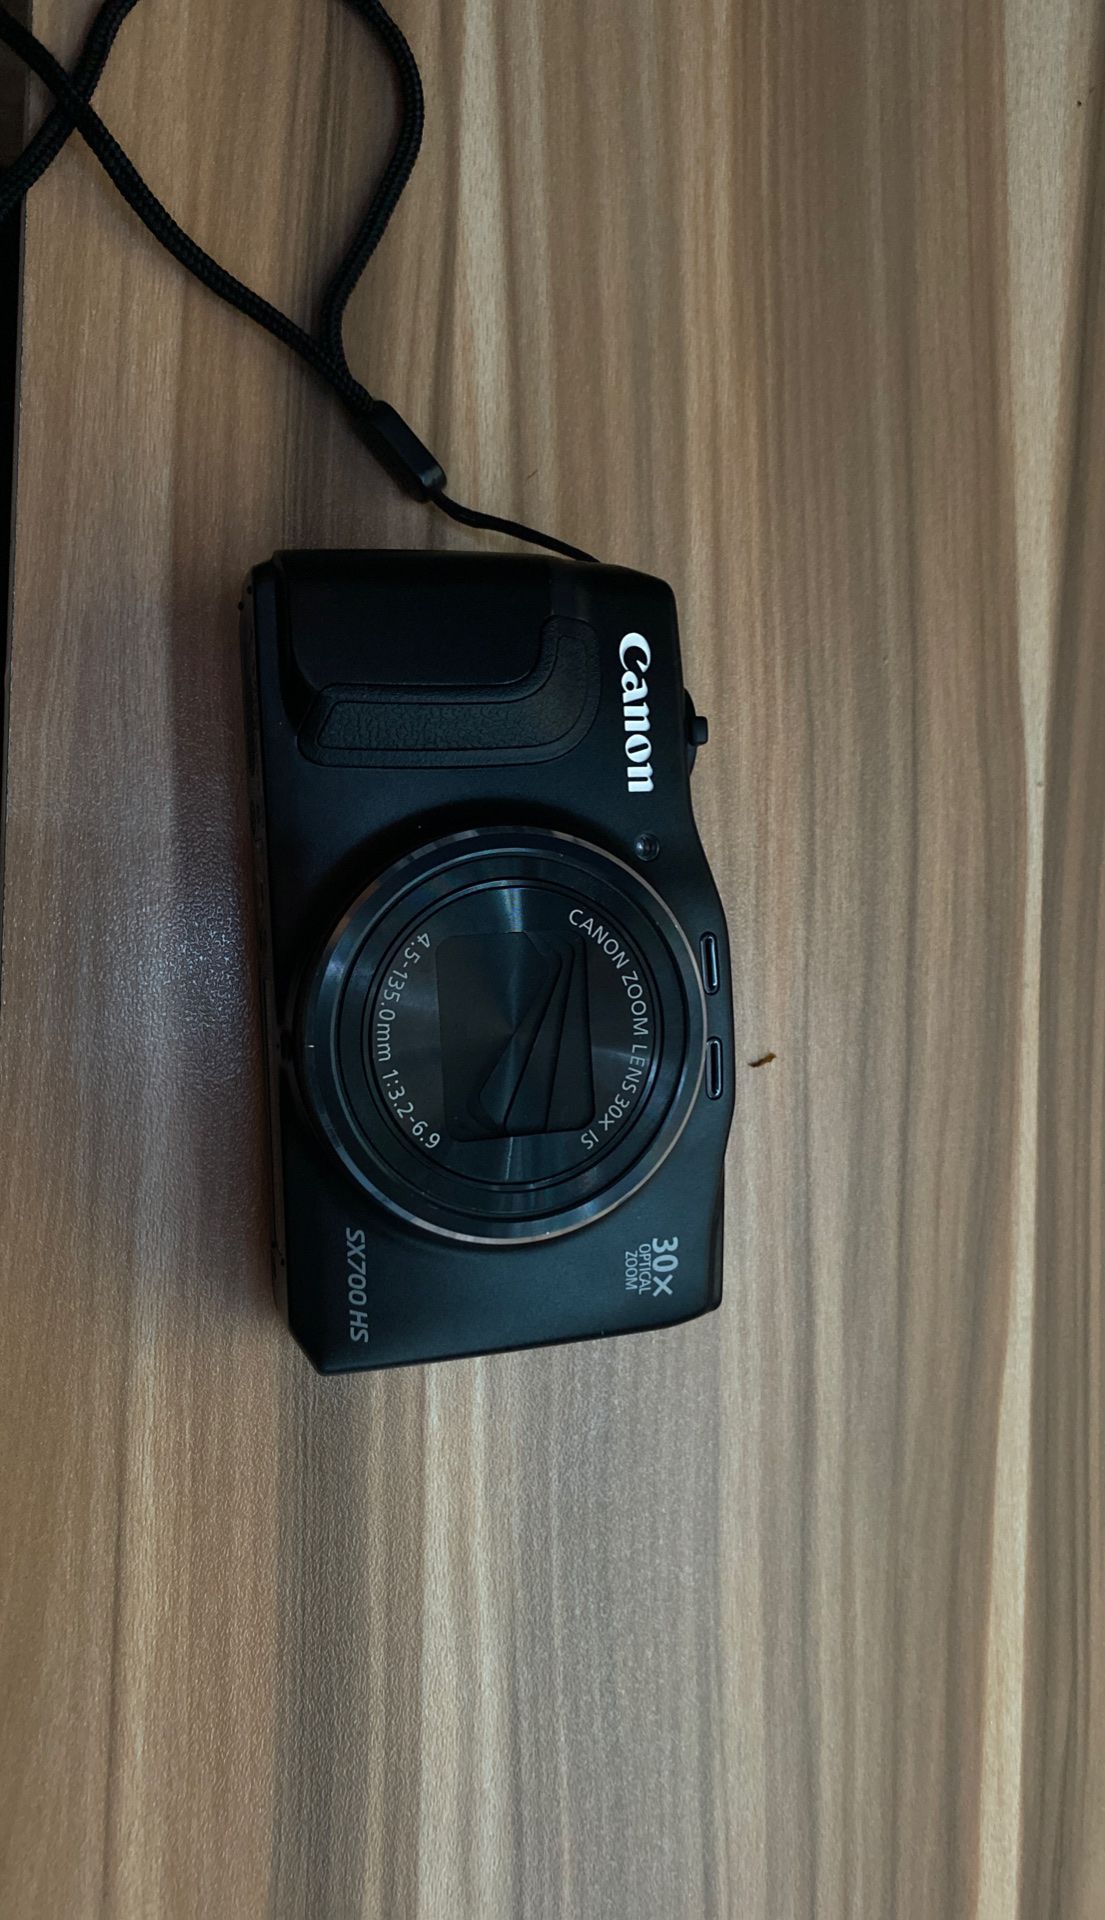 Canon PowerShot SX700 HS digital camera - WiFi enabled (black)